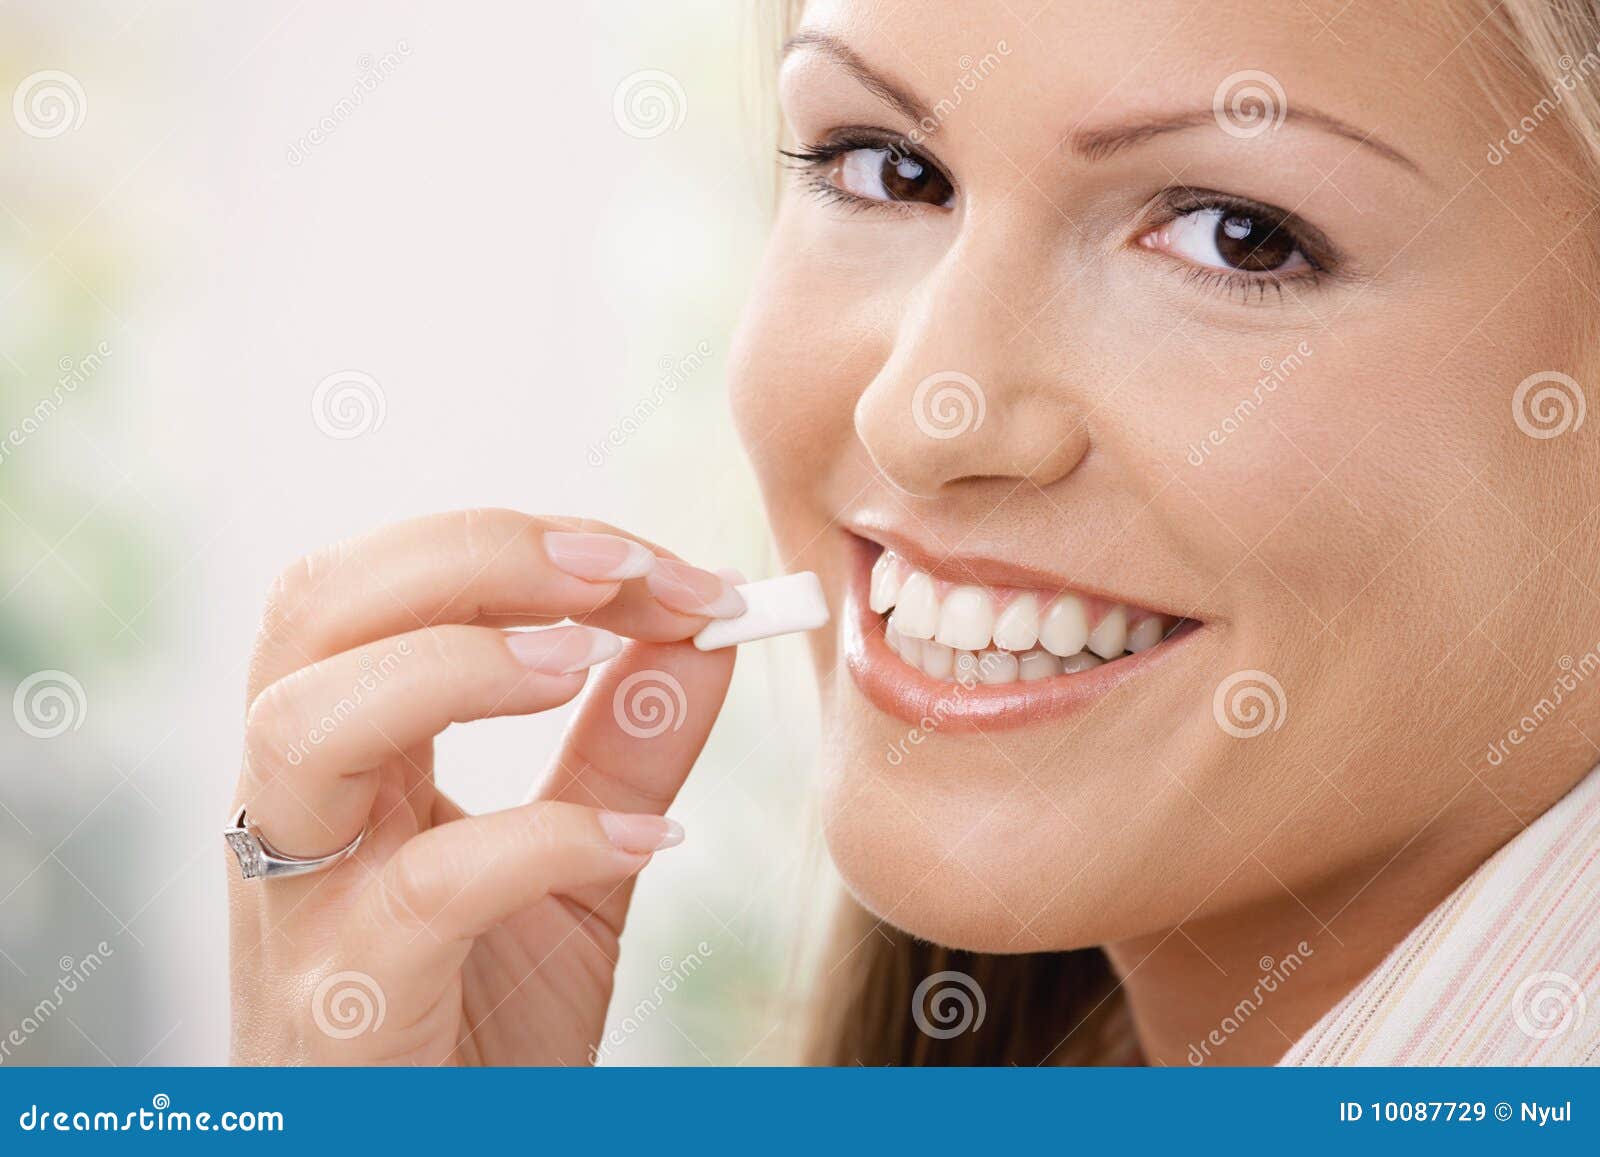 beautiful woman eating chewing gum